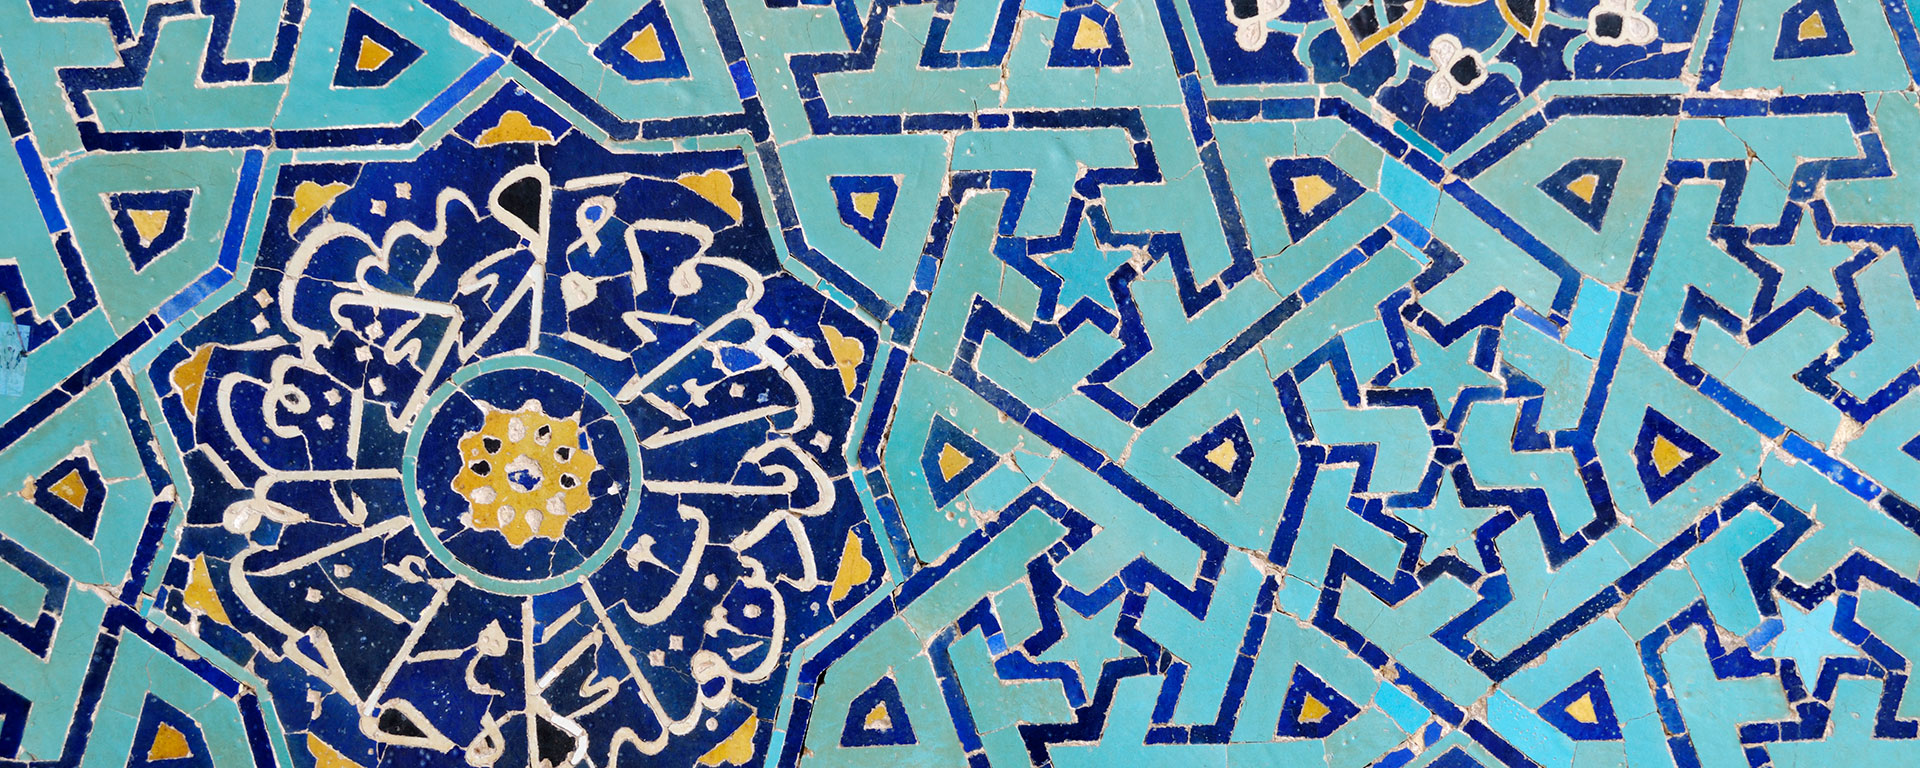 A blue tile design